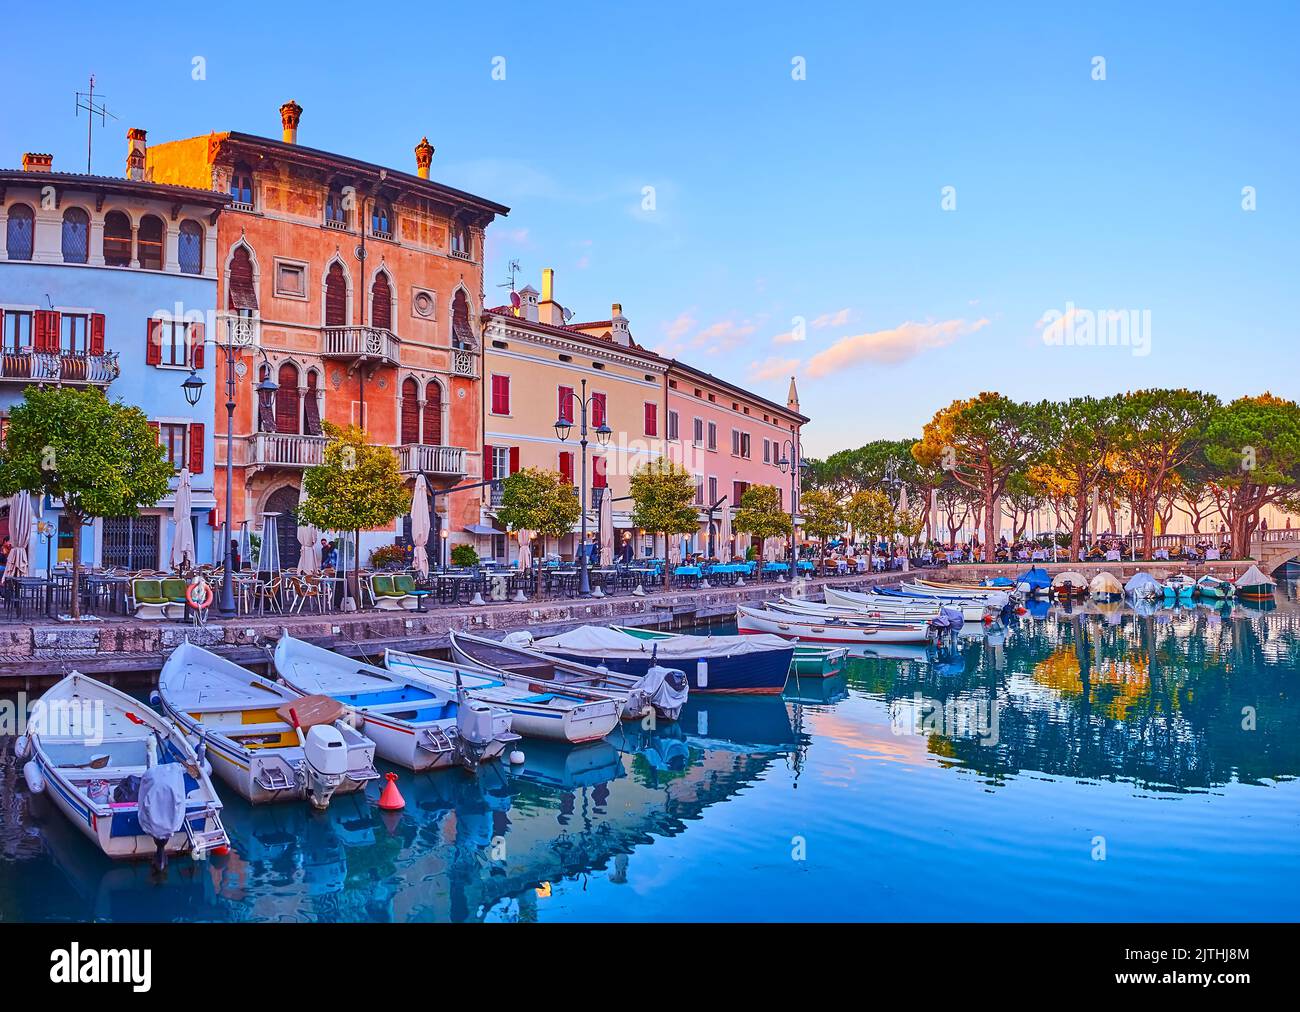 Historic Venetian house amid the colored houses, seen behind the Porto Vecchio (Old Port) of Desenzano del Garda, Lake Garda, Italy Stock Photo